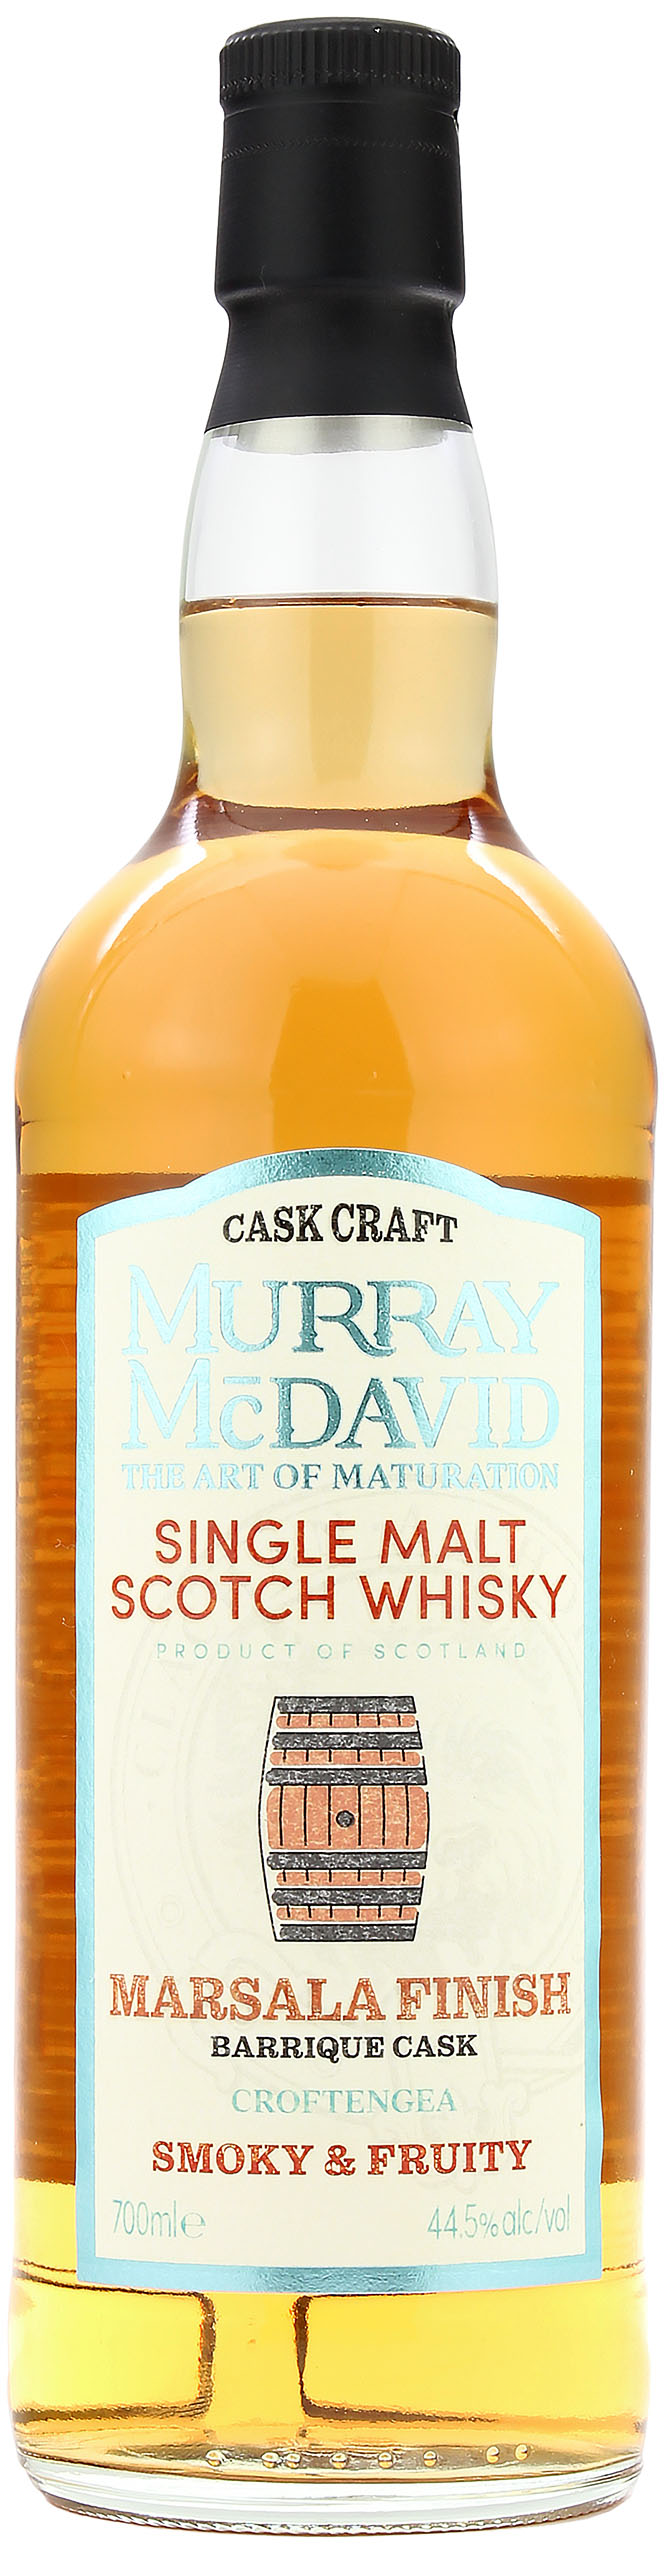 Croftengea Marsala Cask Finish Murray McDavid 44.5% 0,7l